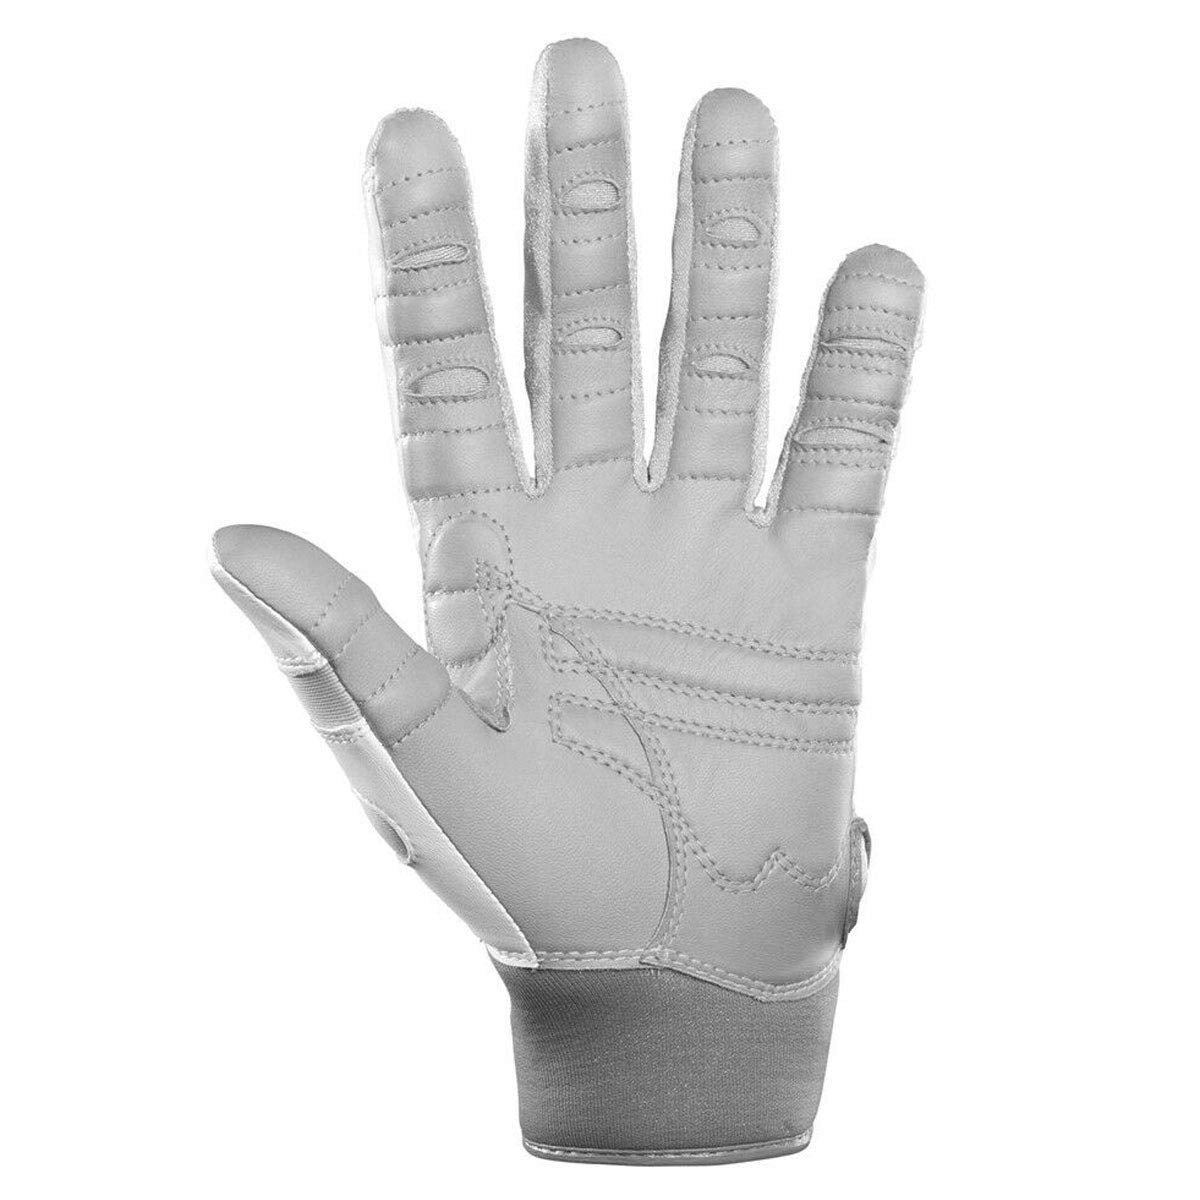 Bionic Women's ReliefGrip Golf Glove (Small, Left Hand)